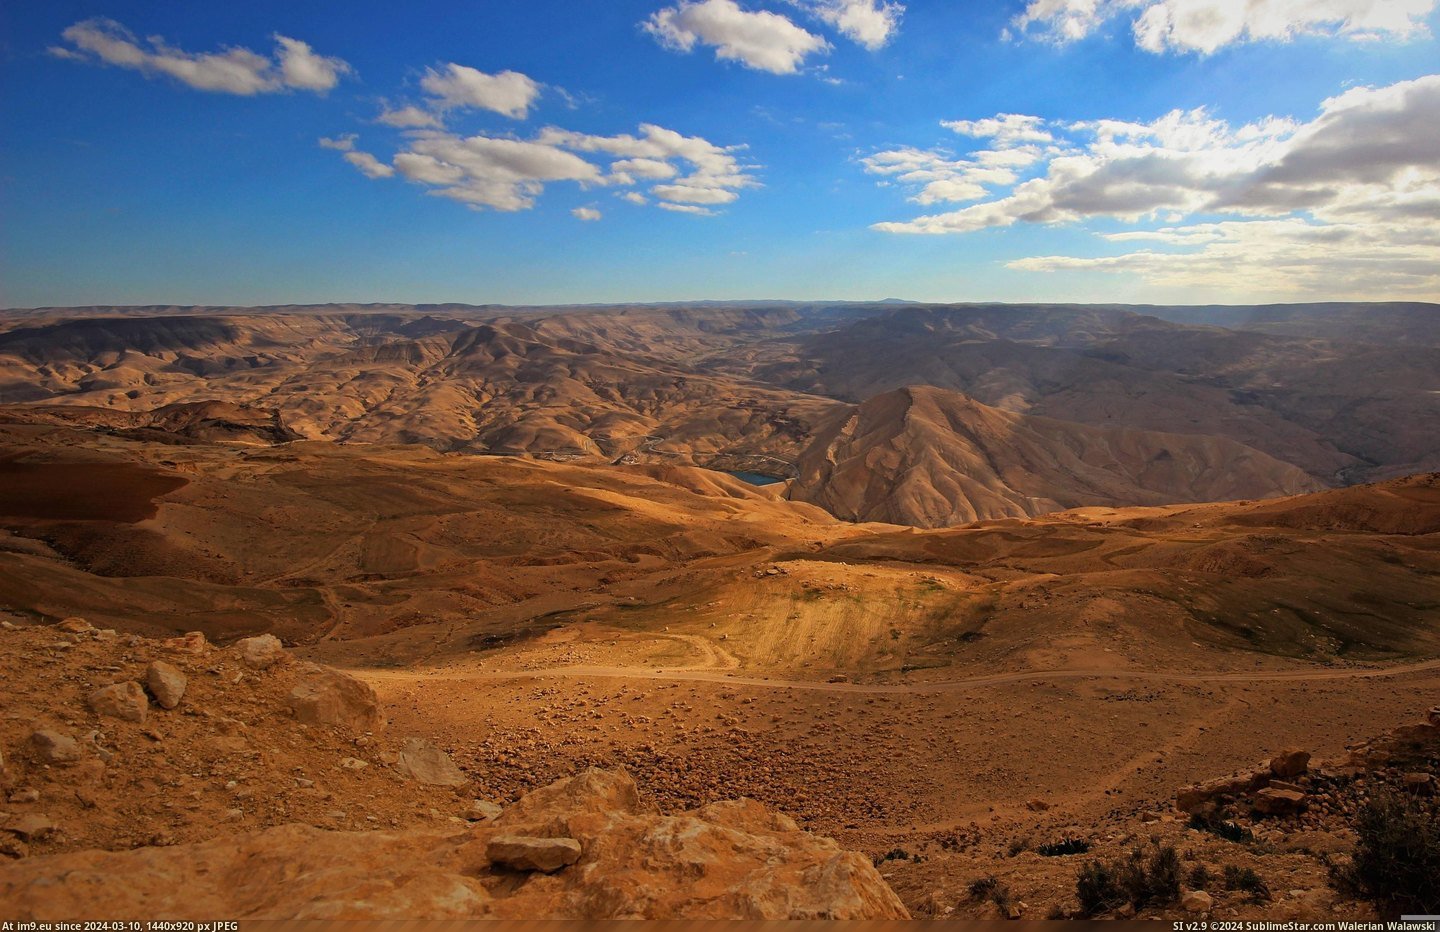 #Great #Highway #Jordan #King [Earthporn] Great views guaranteed when taking the King's Highway, Jordan  [3486x2239] Pic. (Obraz z album My r/EARTHPORN favs))